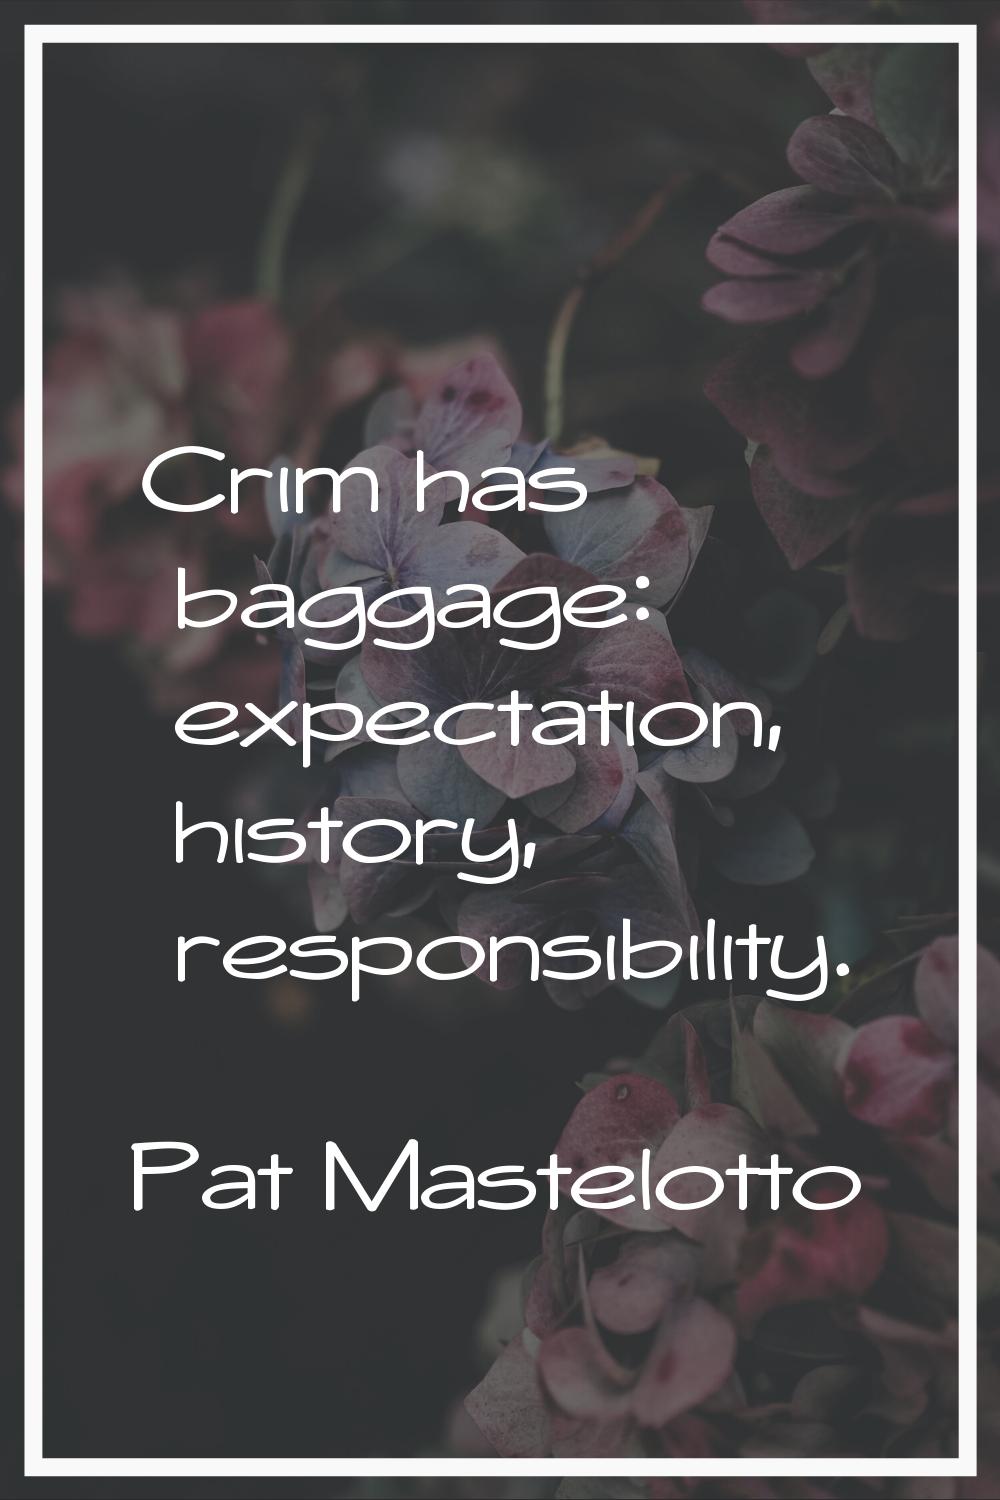 Crim has baggage: expectation, history, responsibility.